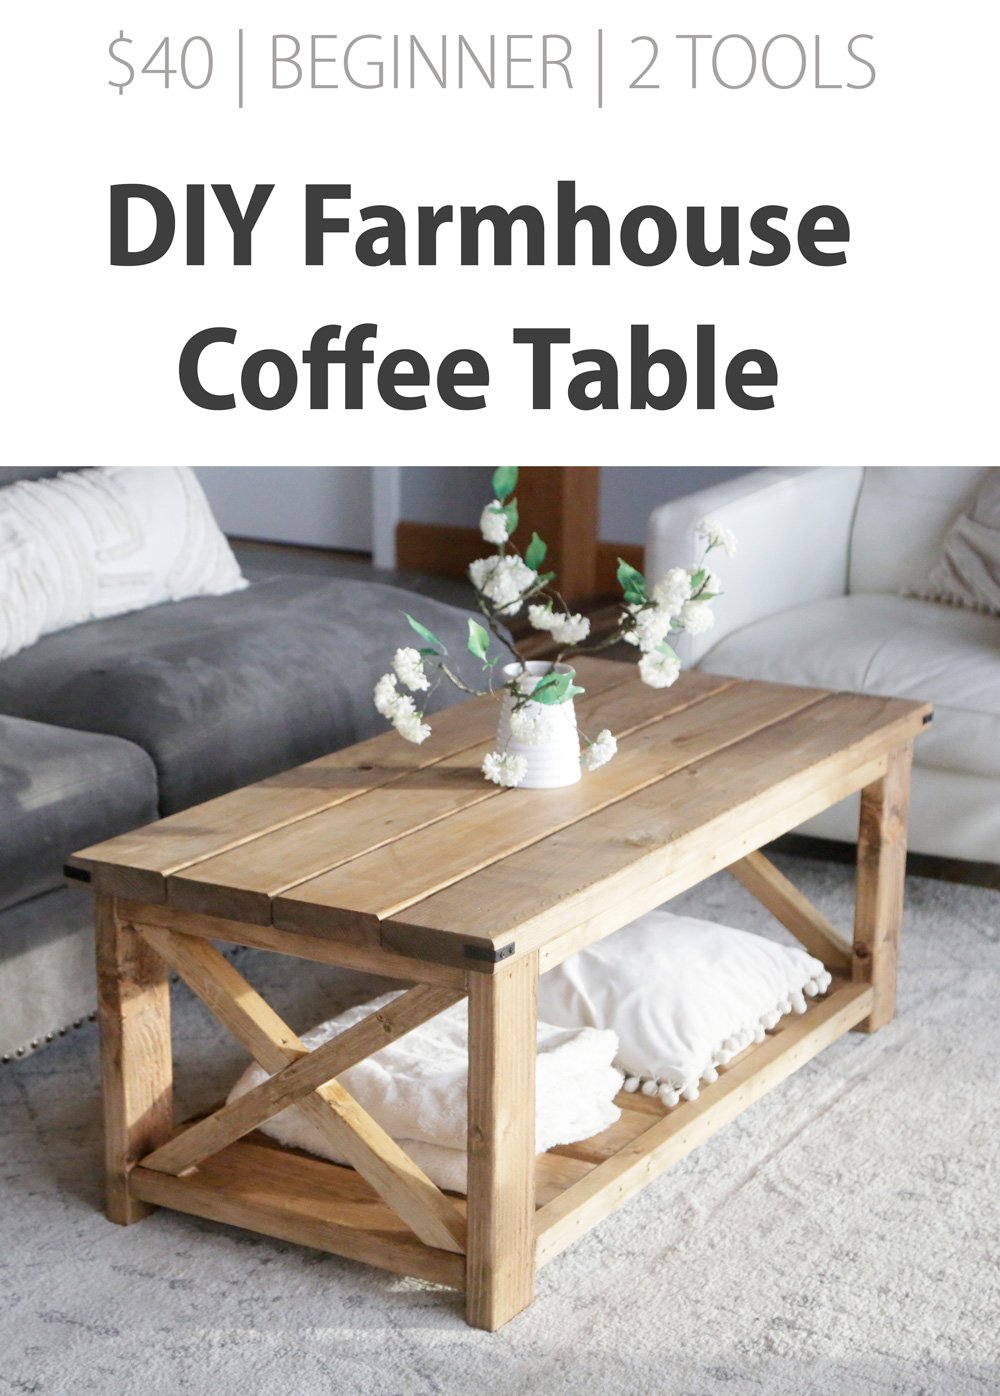 Farmhouse Coffee Table Beginner Under, Diy Small Side Table Plans